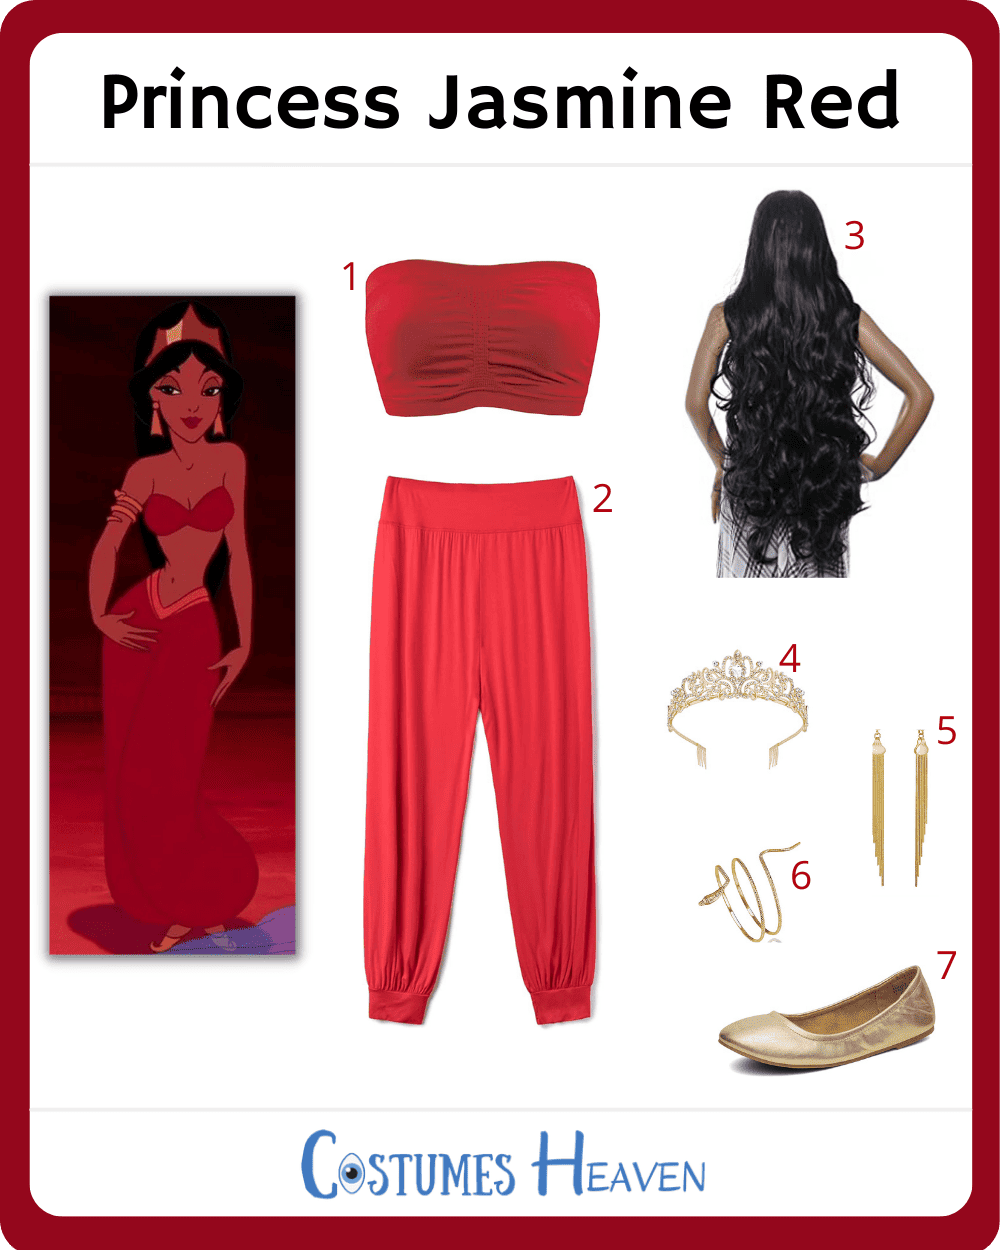 Princess Jasmine's red costume